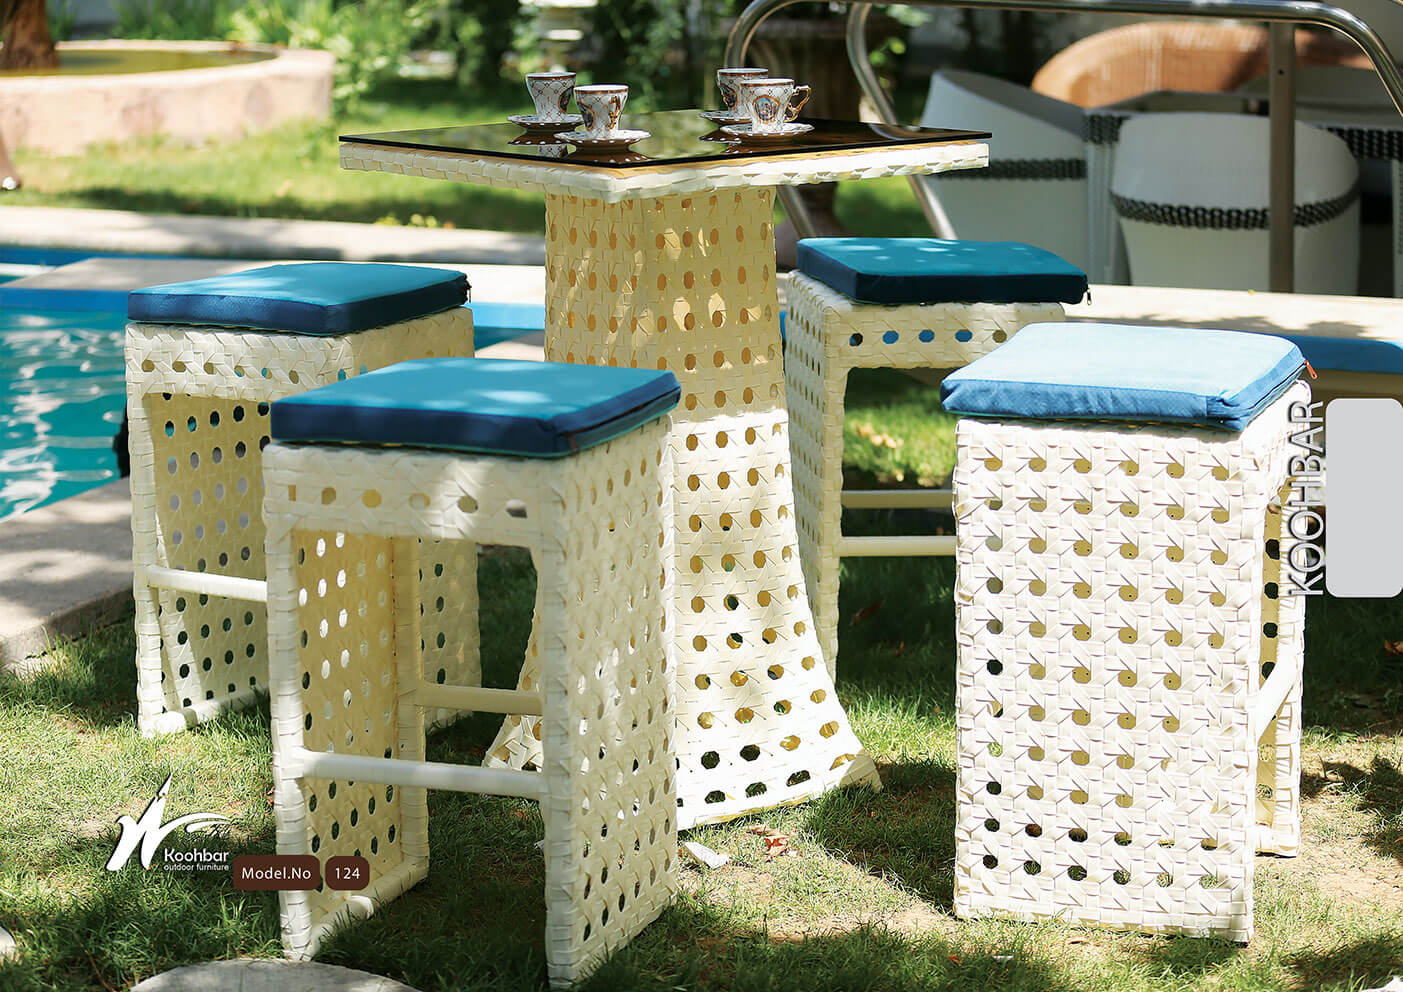 kohbar patio conversation sets 124 model0 - ست میز صندلی بار حصیری کوهبر مدل ۱۲۴ -  - patio-bar-furniture